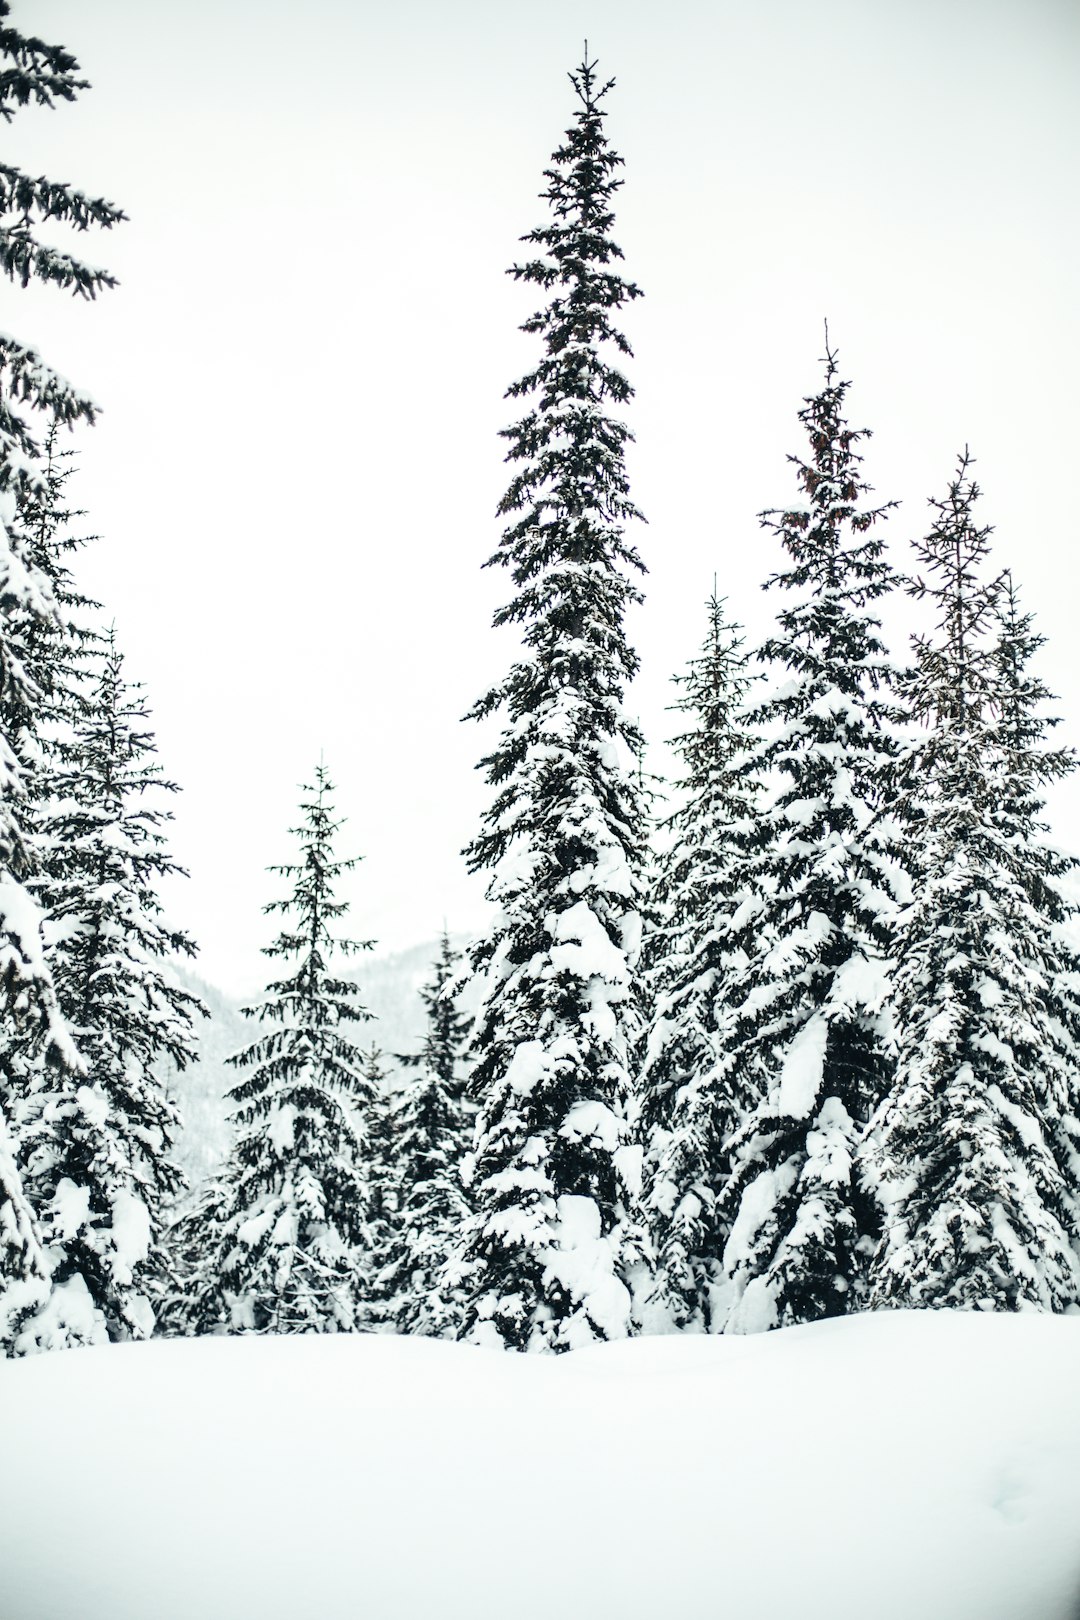 Spruce-fir forest photo spot British Columbia British Columbia